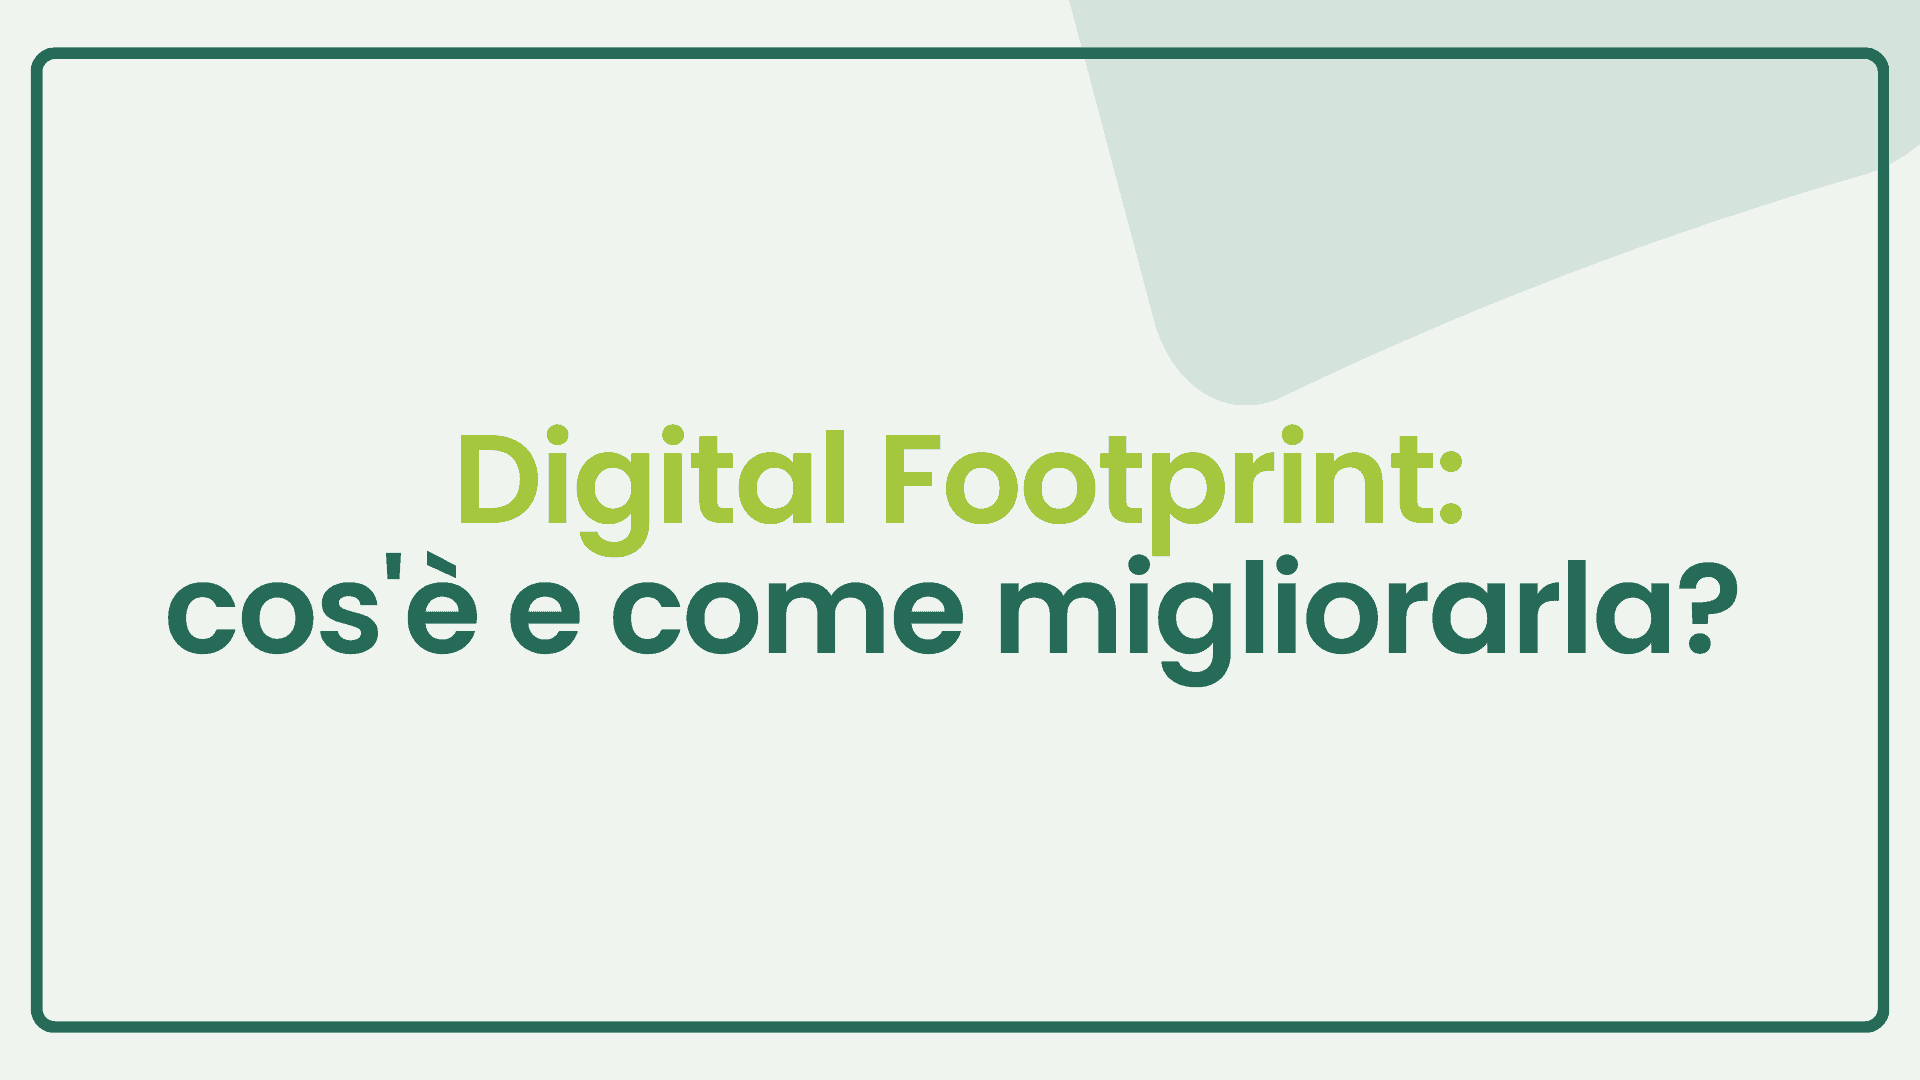 Digital footprint: cos’è e come migliorarla?